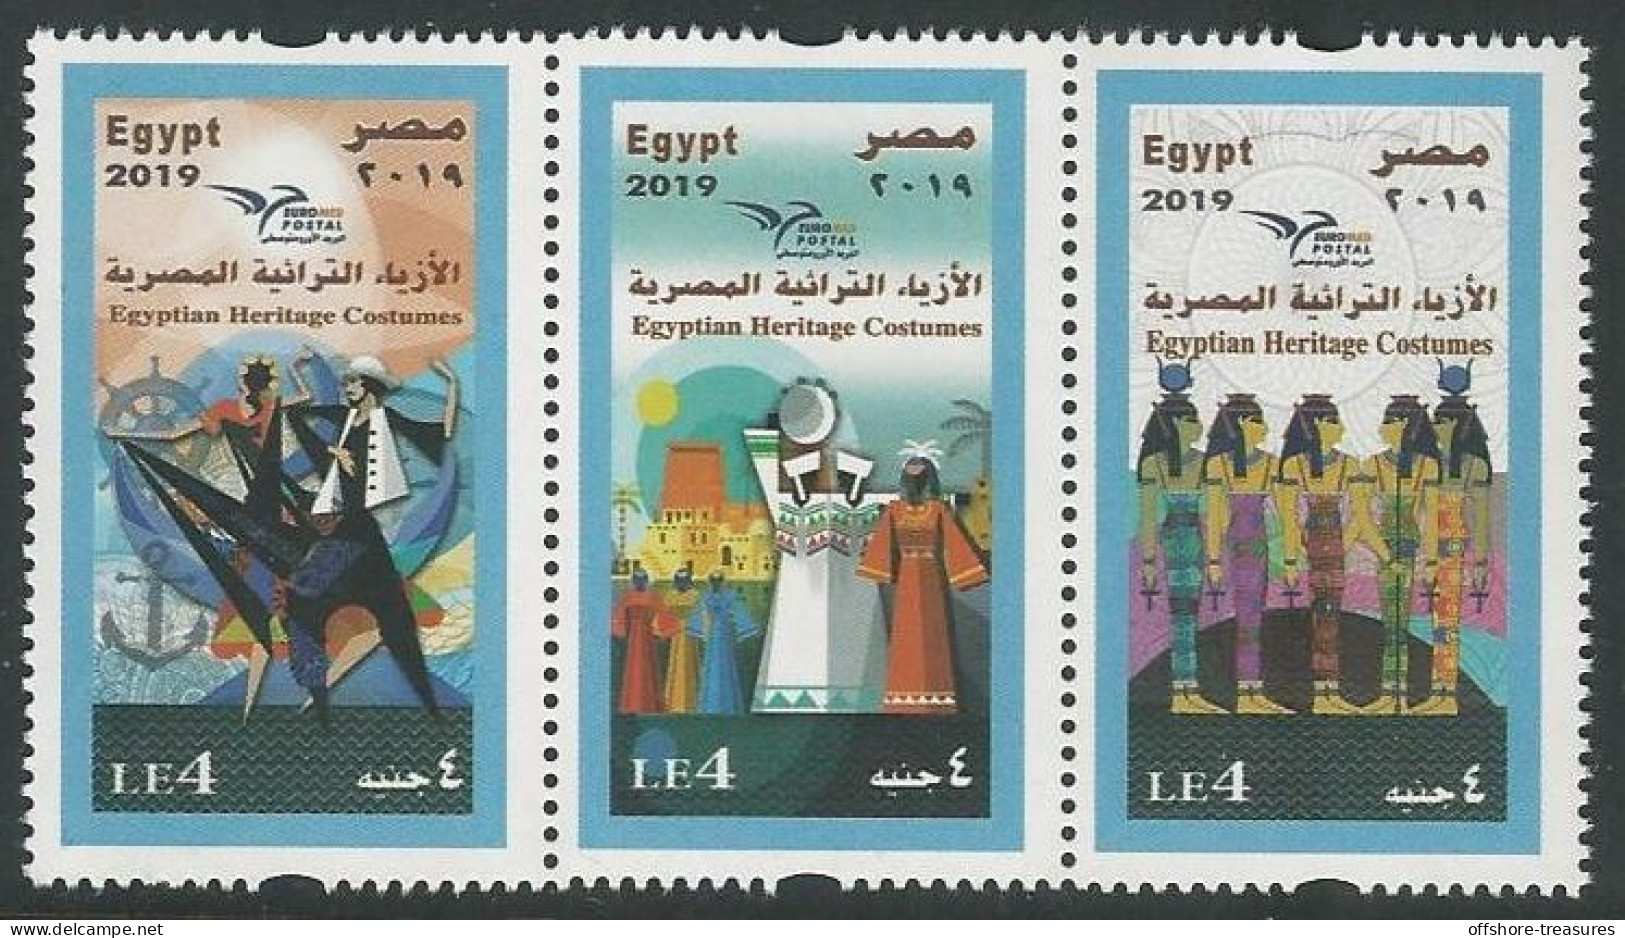 EGYPT 2019 STAMP STRIP ISSUED EUROMED POSTAL EGYPTIAN HERITAGE COSTUMES MNH - Ongebruikt